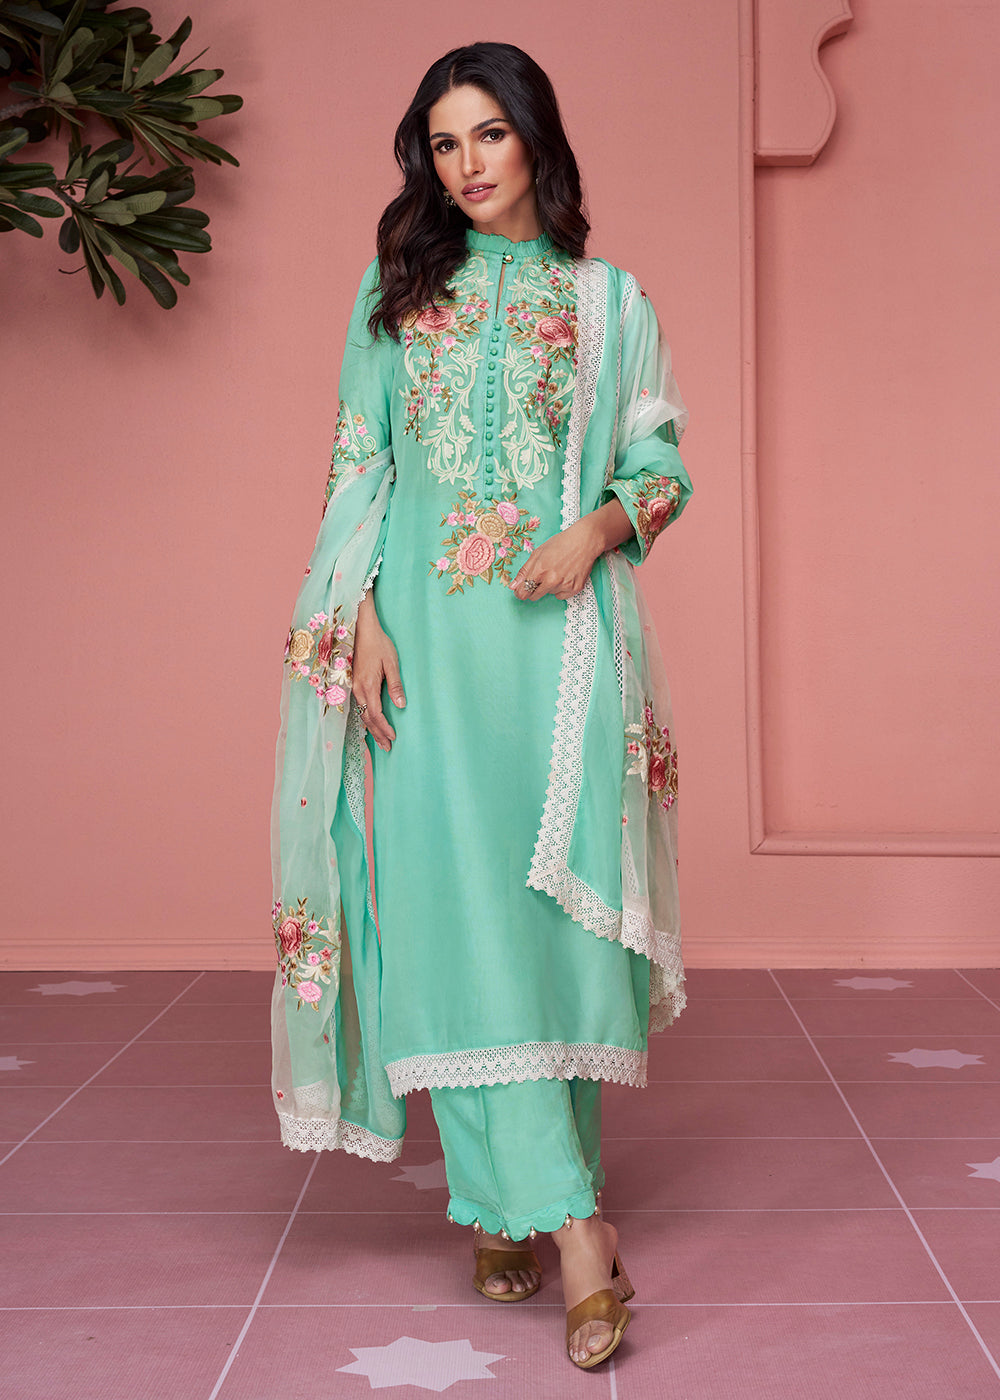 Buy Now Organza Silk Aqua Green Pakistani Style Salwar Suit Online in USA, UK, Canada, Germany, Australia & Worldwide at Empress Clothing. 